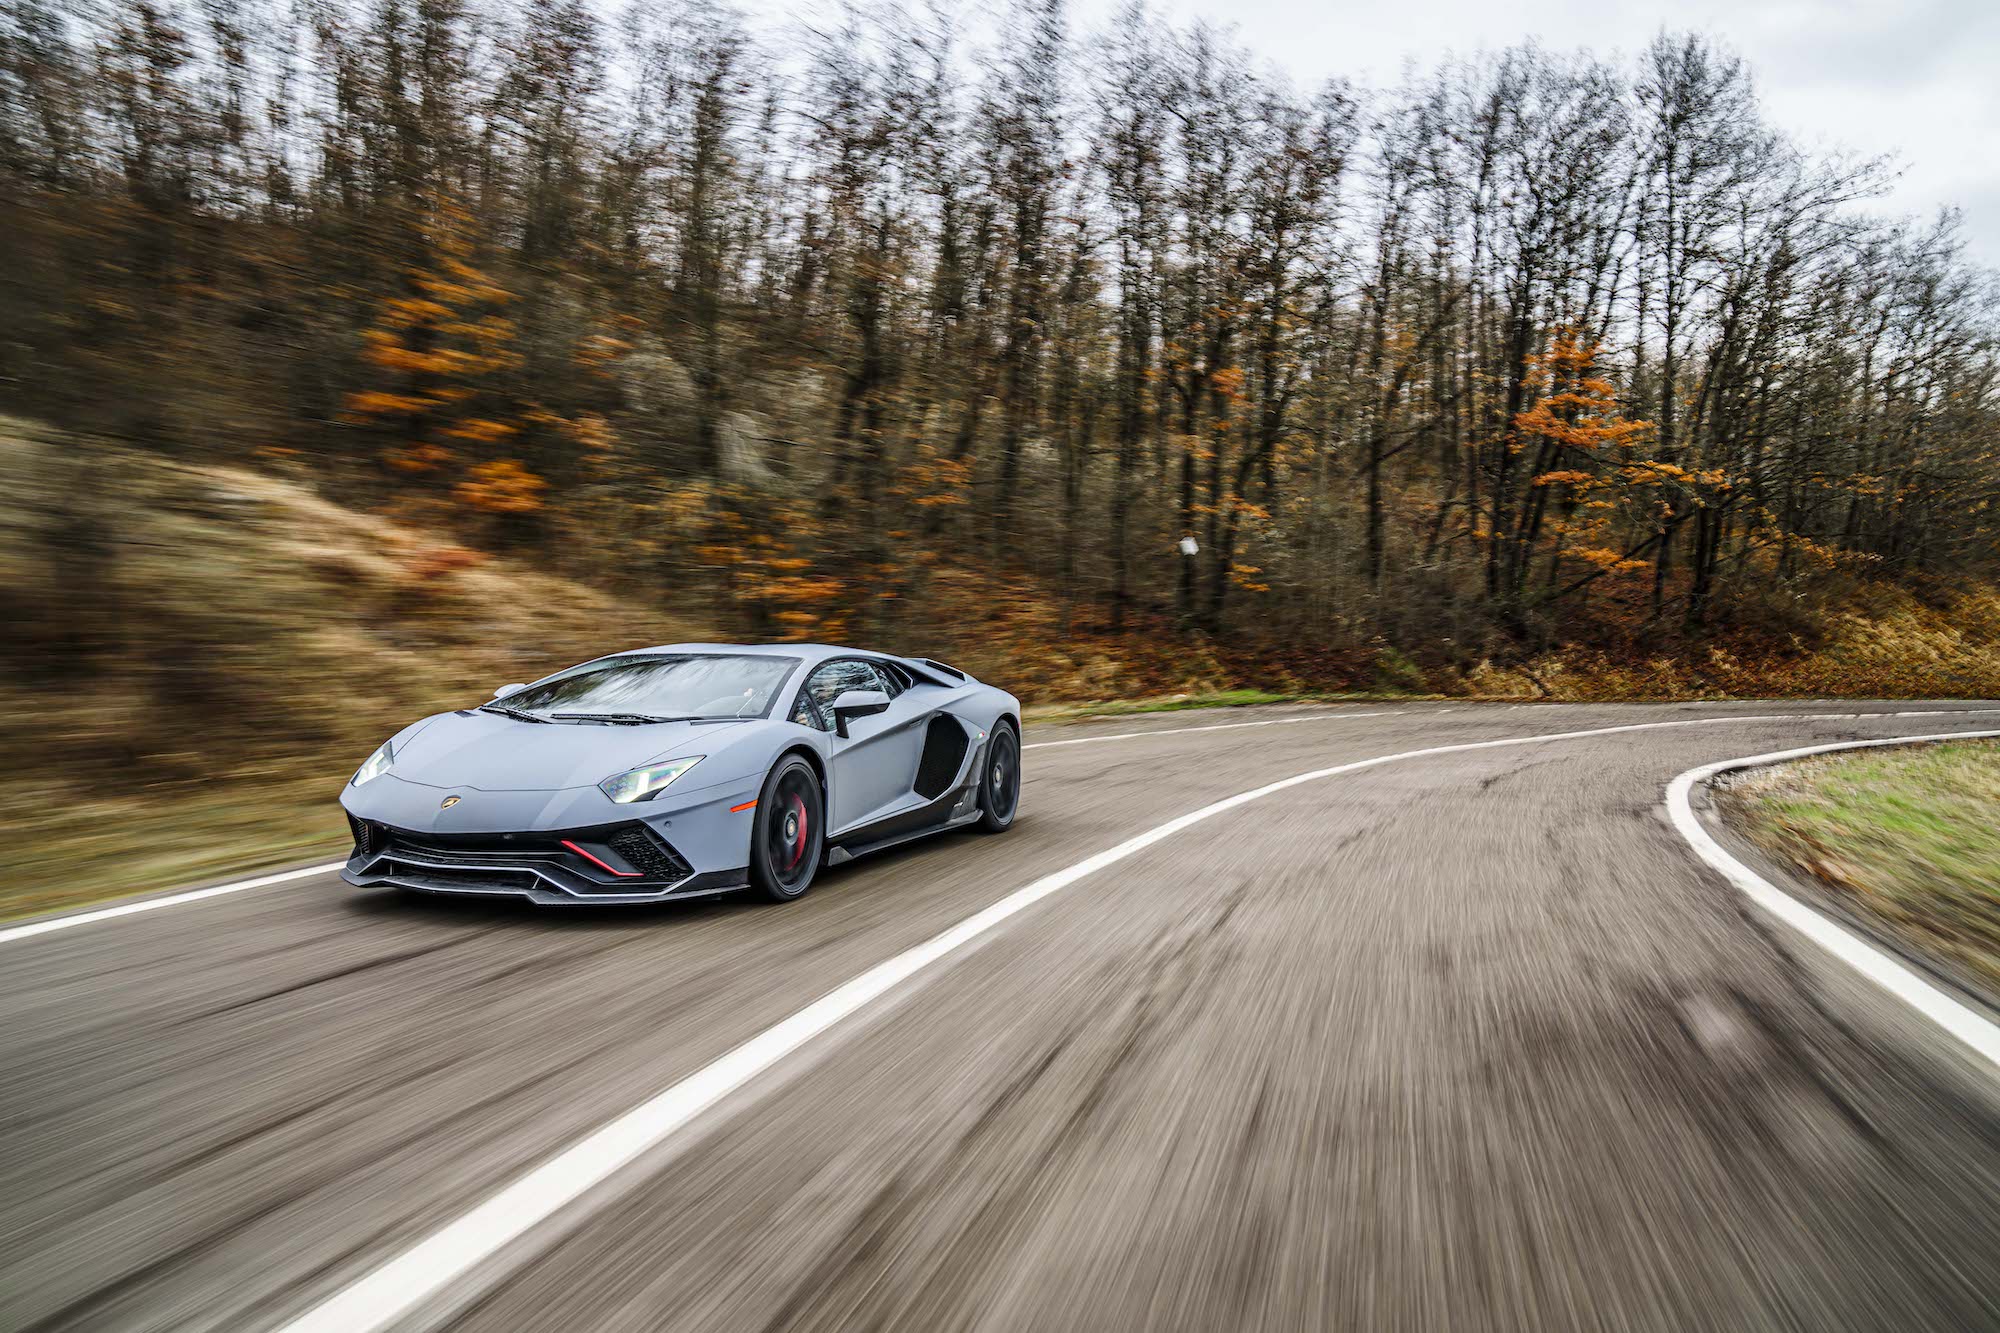 Behind the wheel of the thunderous Lamborghini Aventador